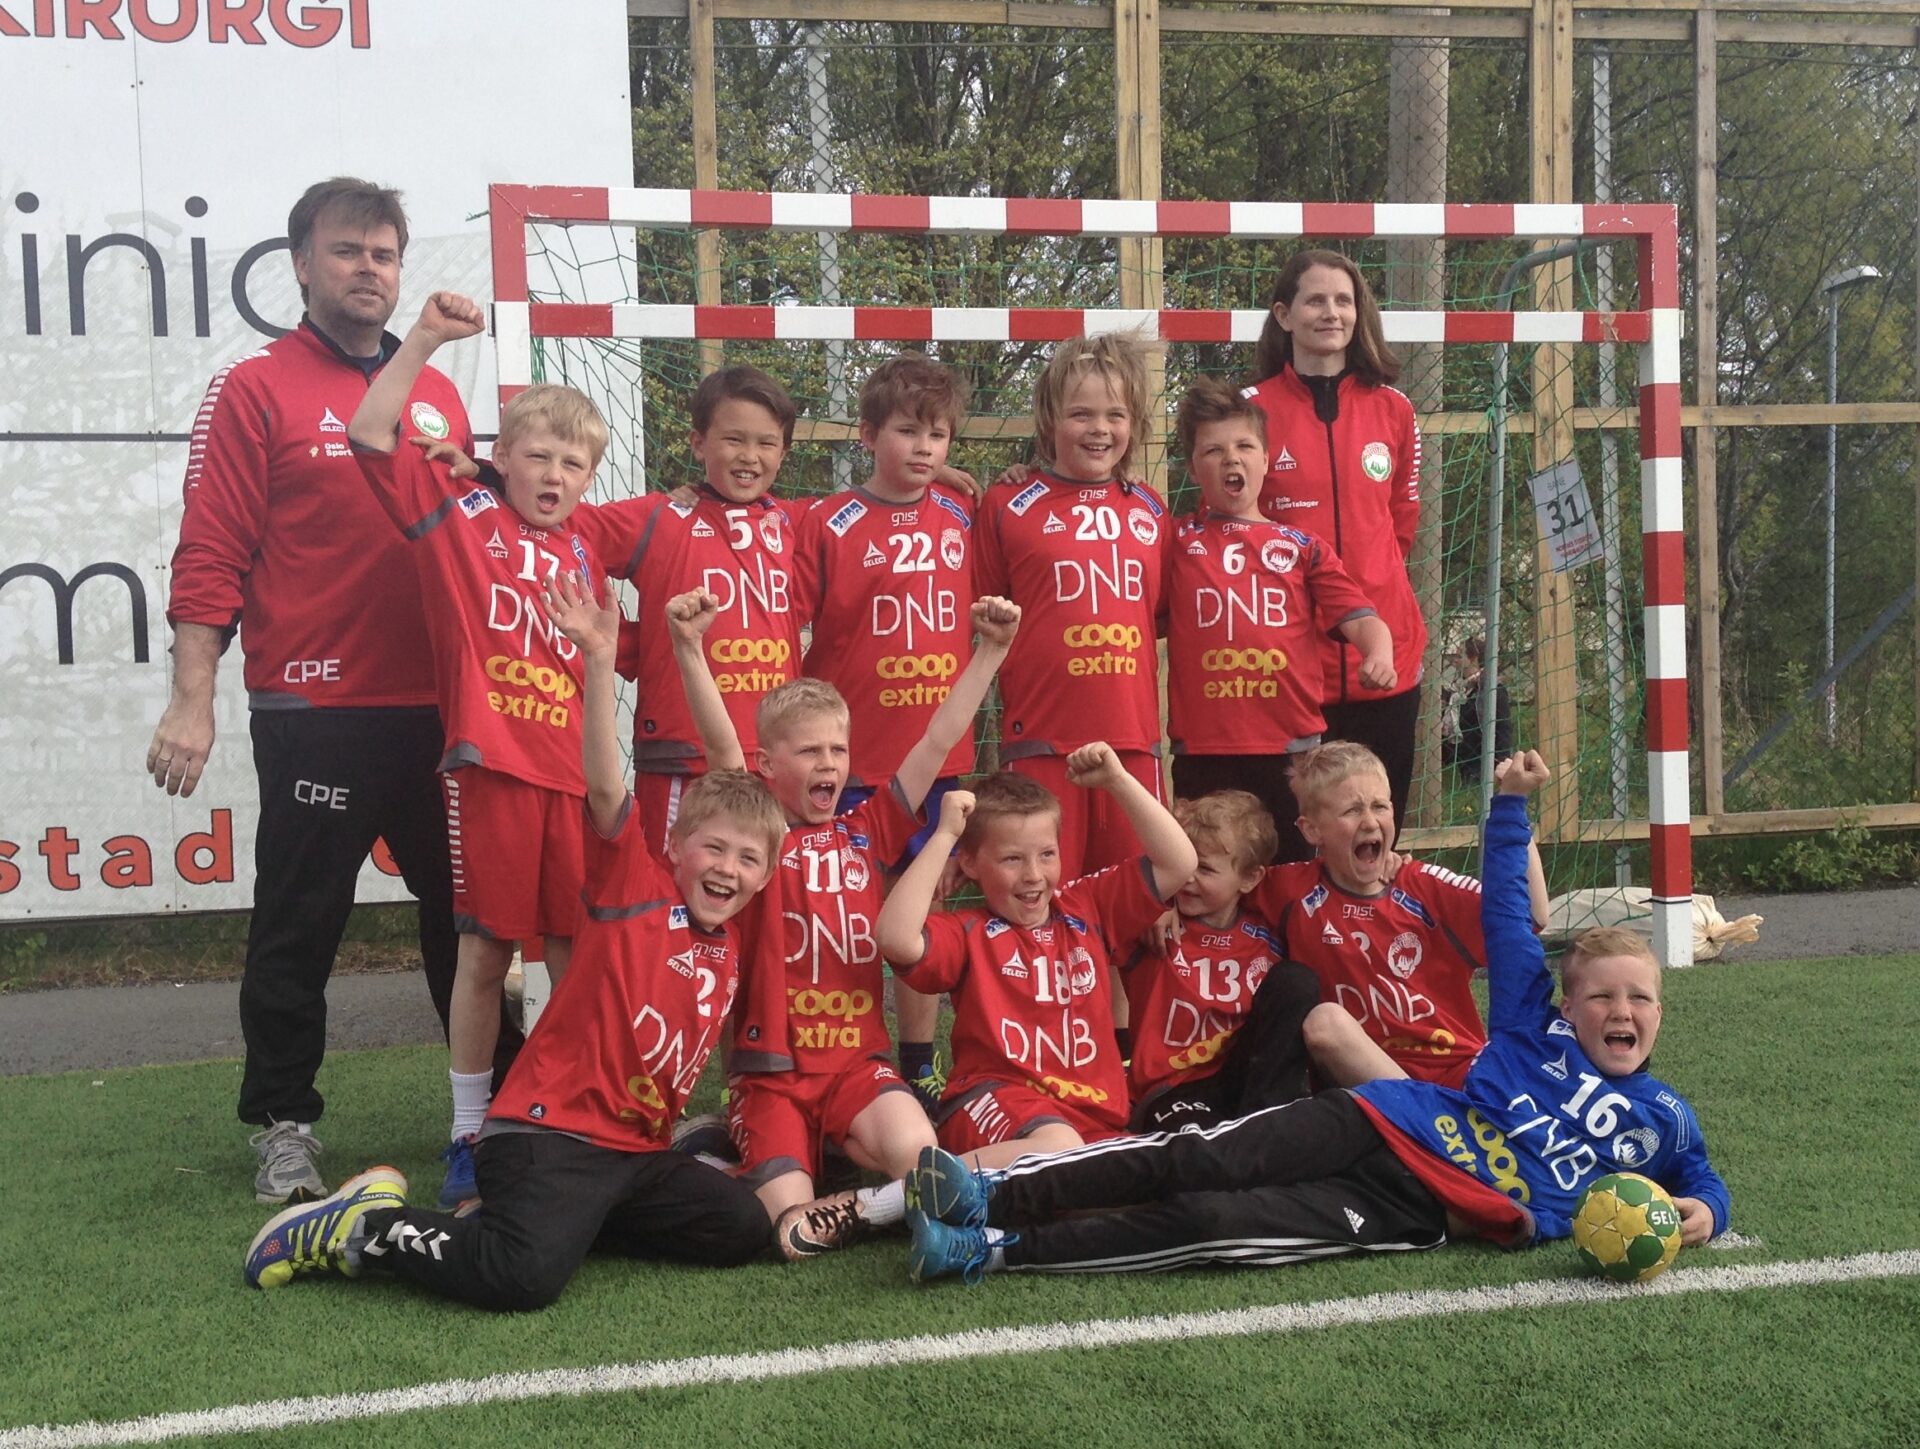 Lagbilde under Fredrikstad cup mai 2016. Foto: Monica Yvonne Heier Einerkjær.